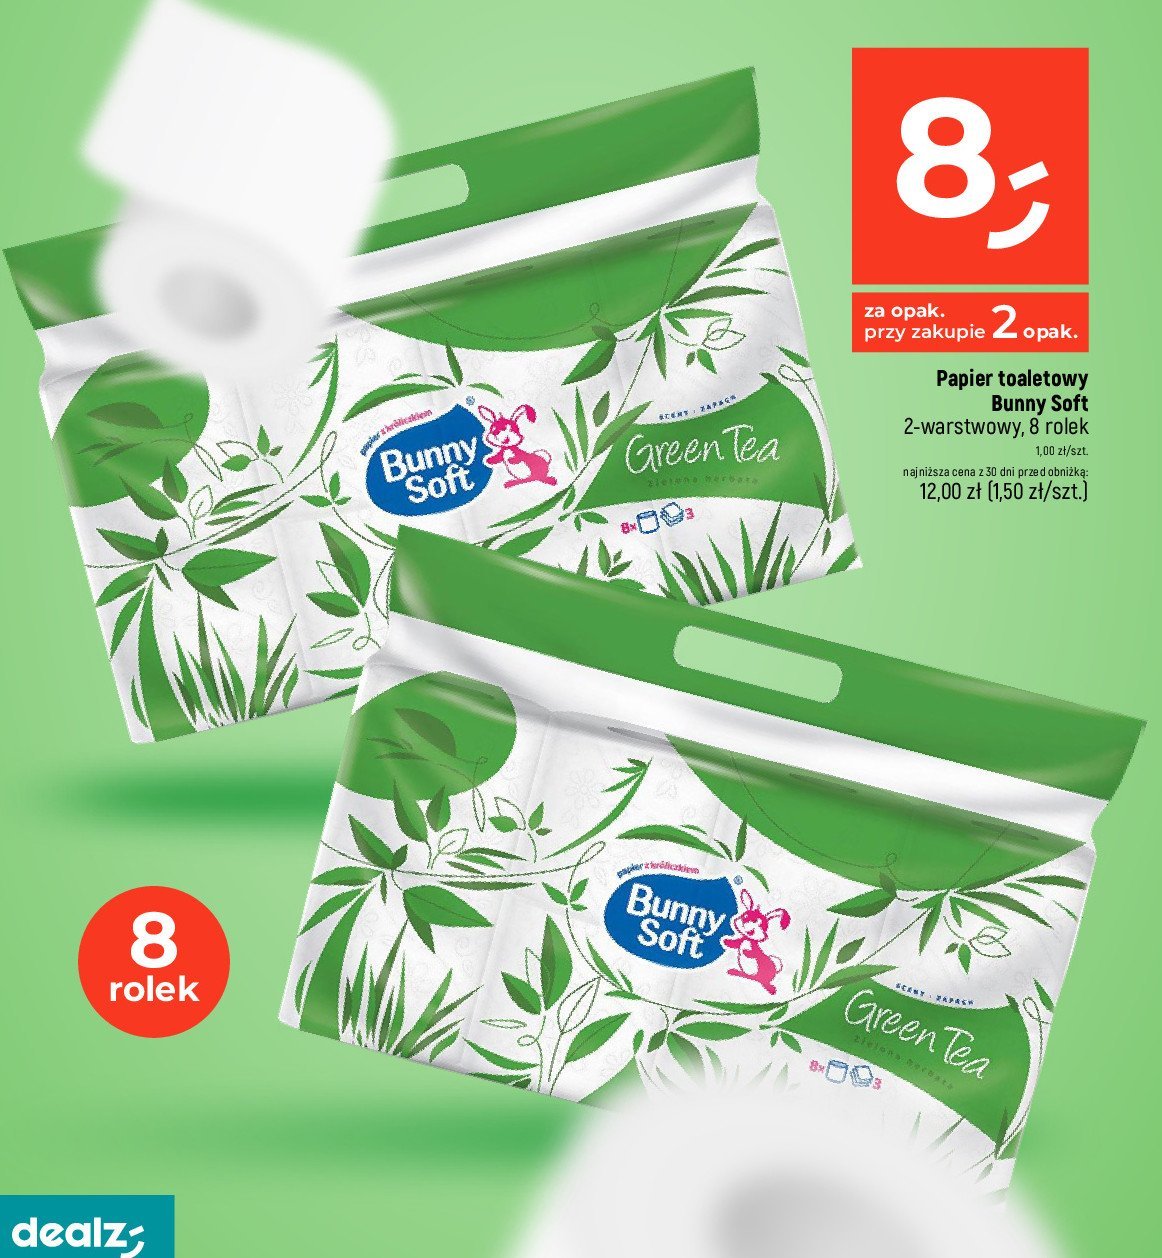 Papier toaletowy green tea Bunny soft promocja